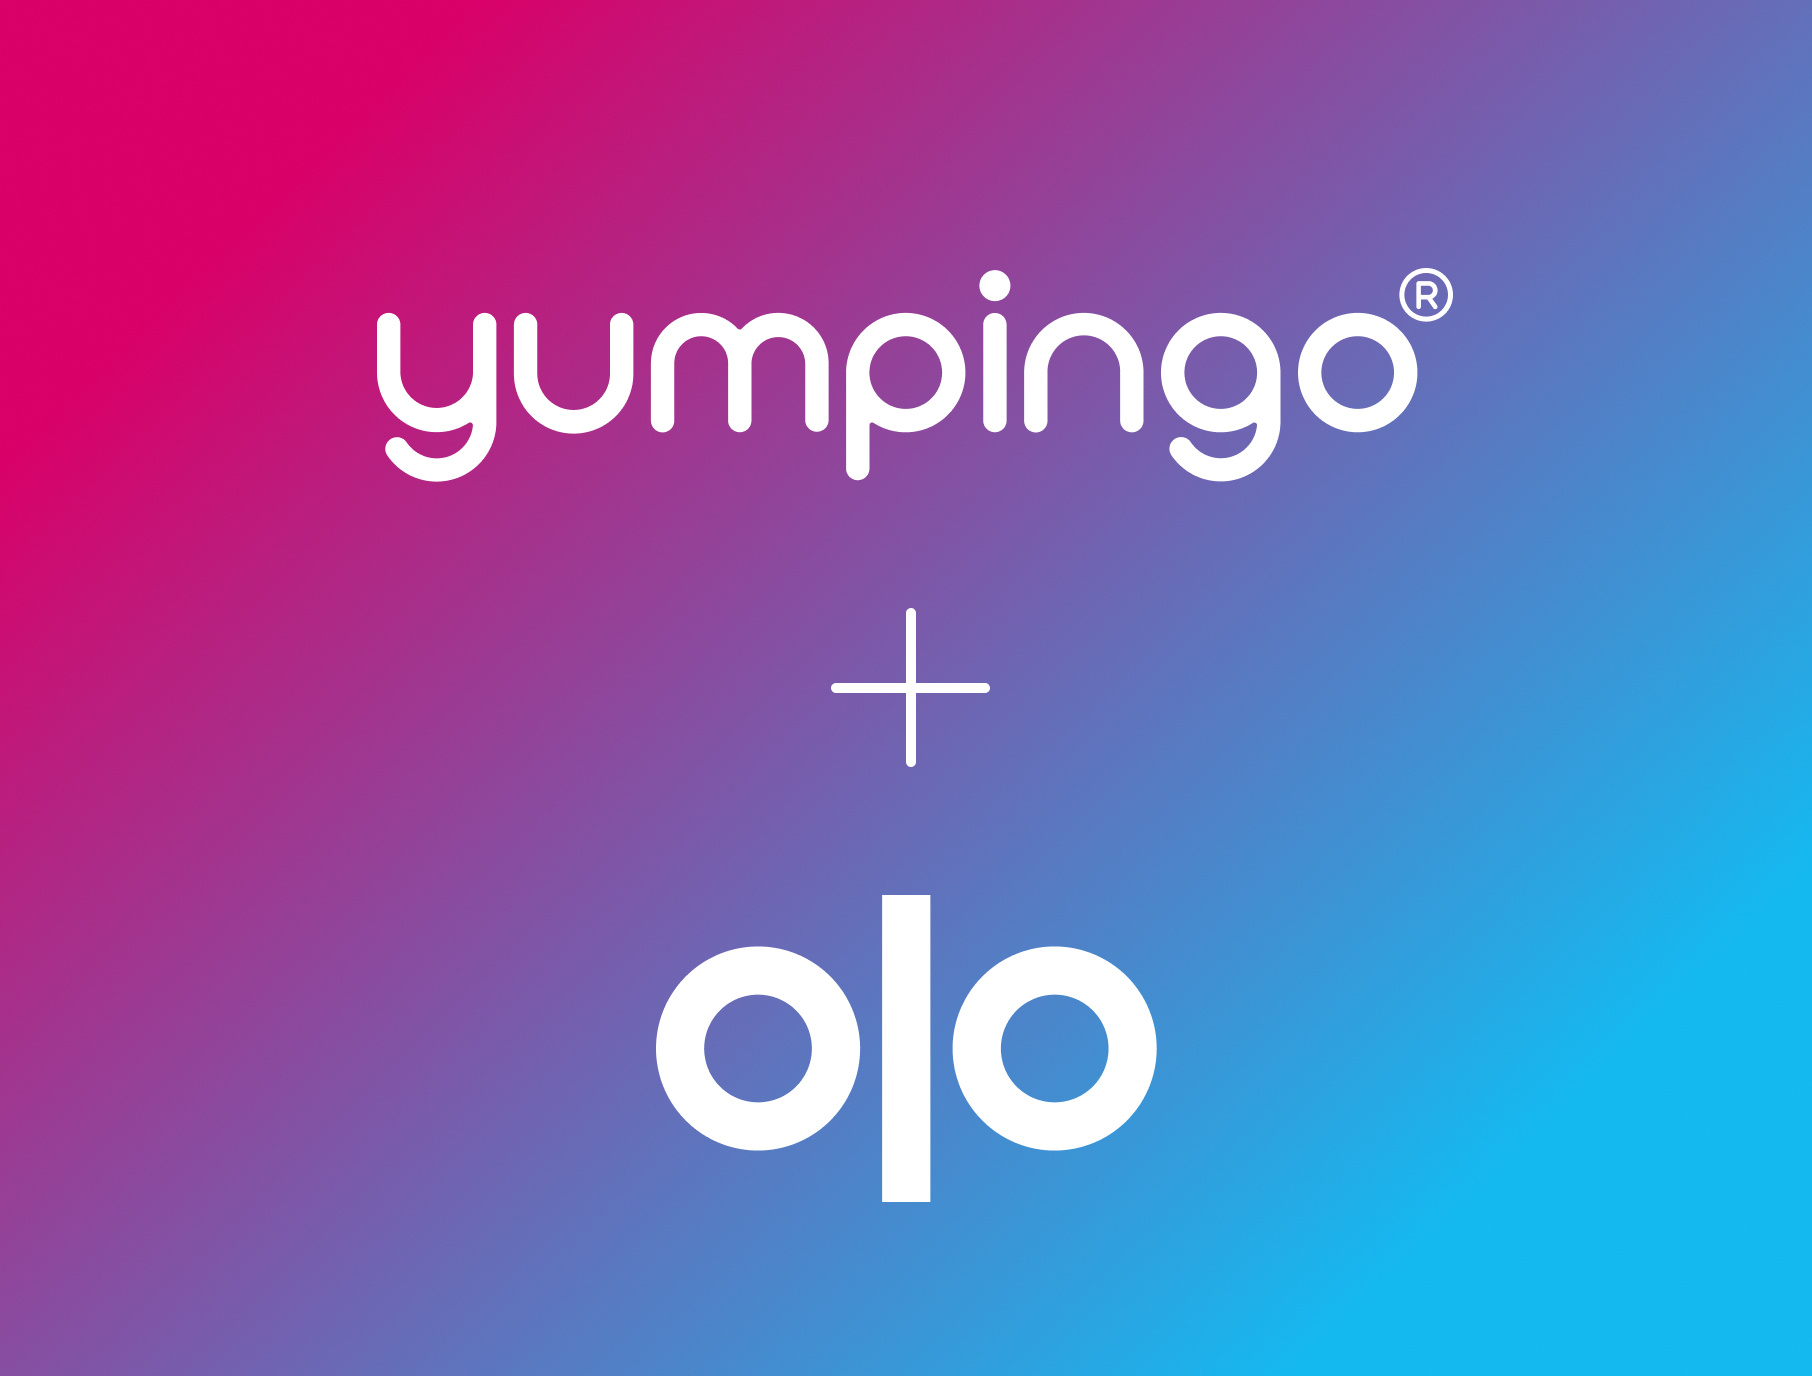 olo and yumpingo